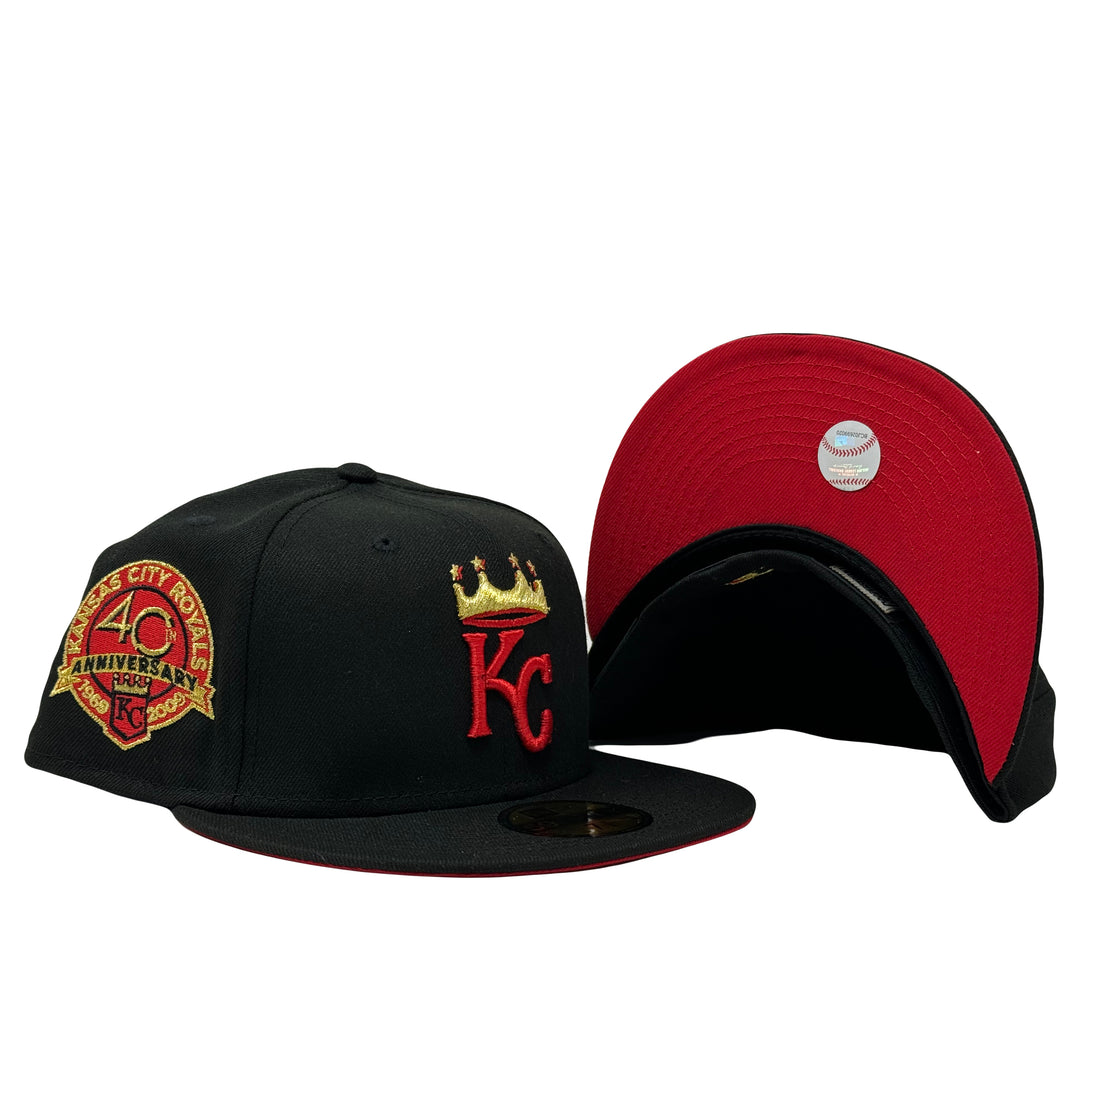 Kansas City Royals 40th Anniversary Red Brim New Era Fitted Hat